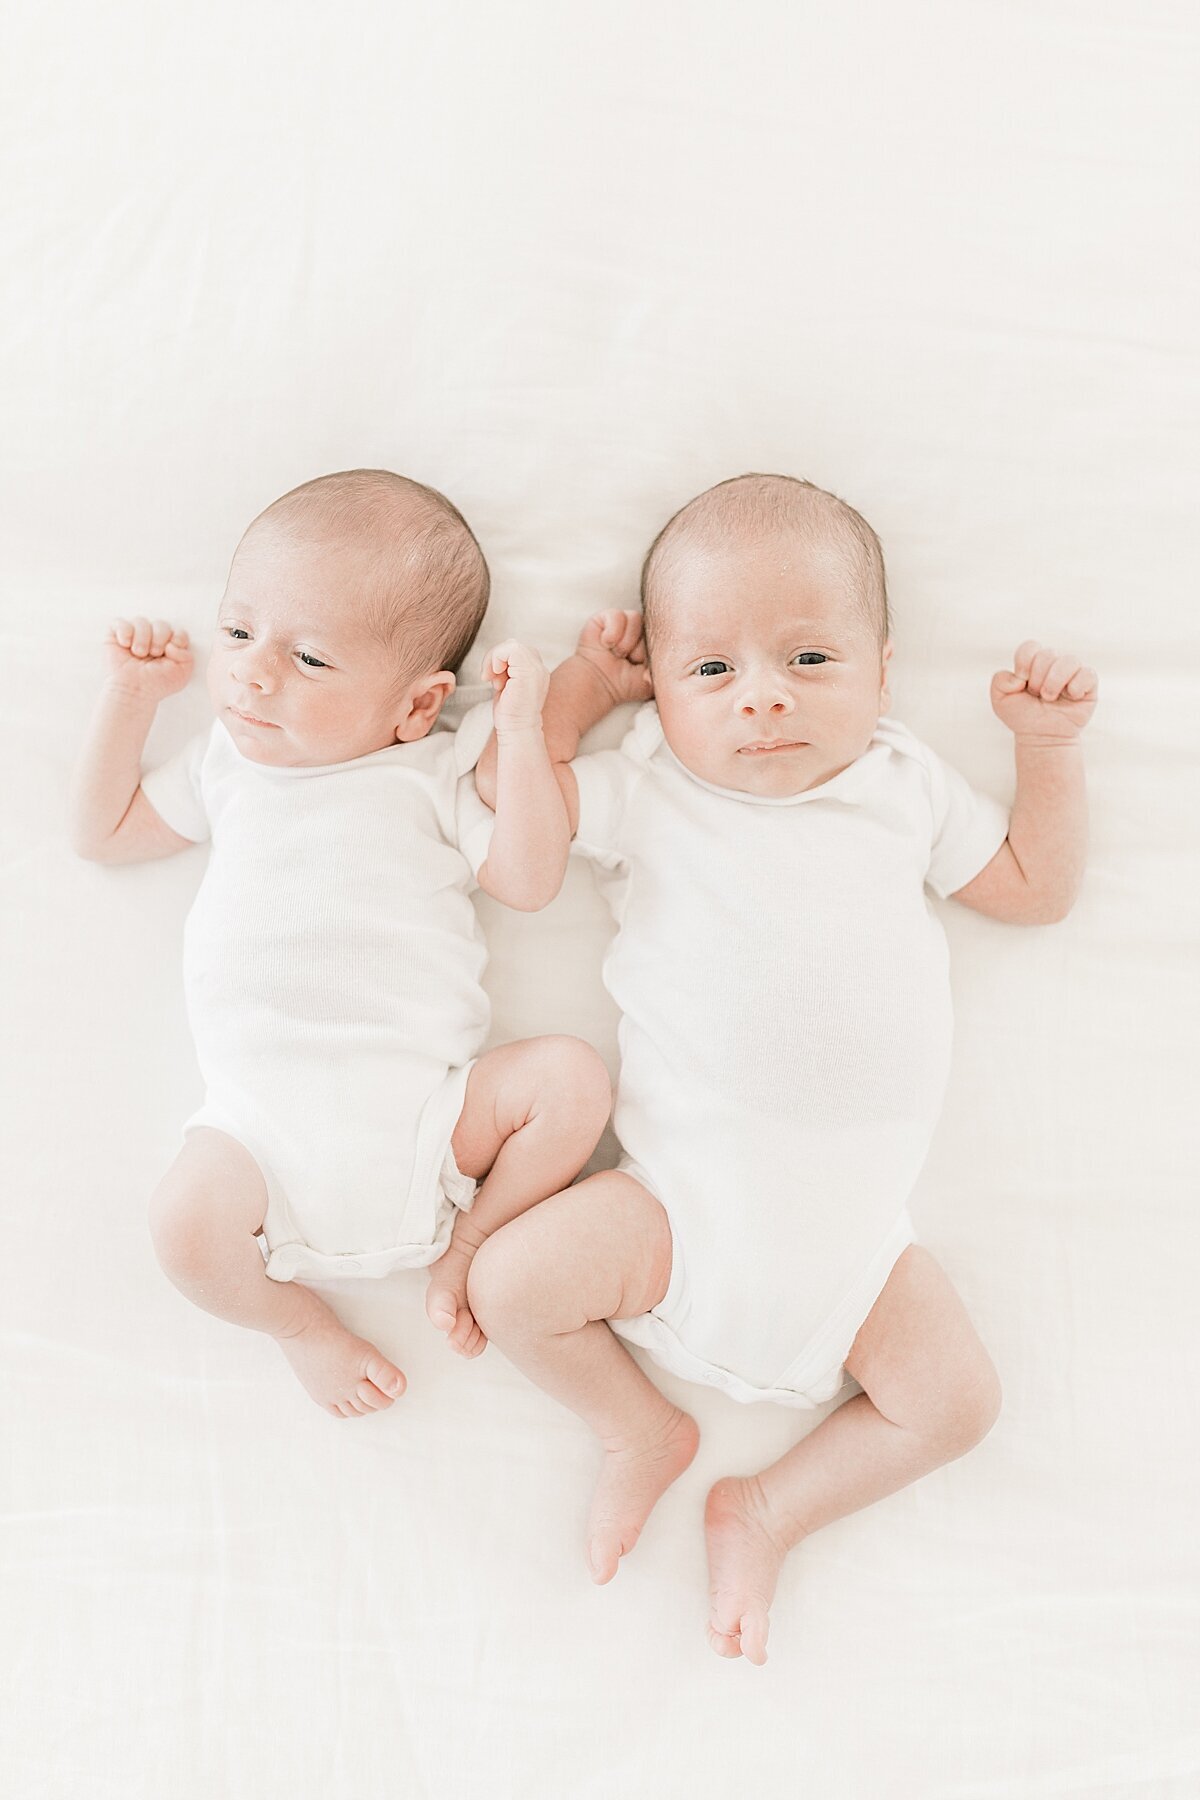 charleston-baby-photographer-twin-newborn-session-caitlyn-motycka-photography_0001